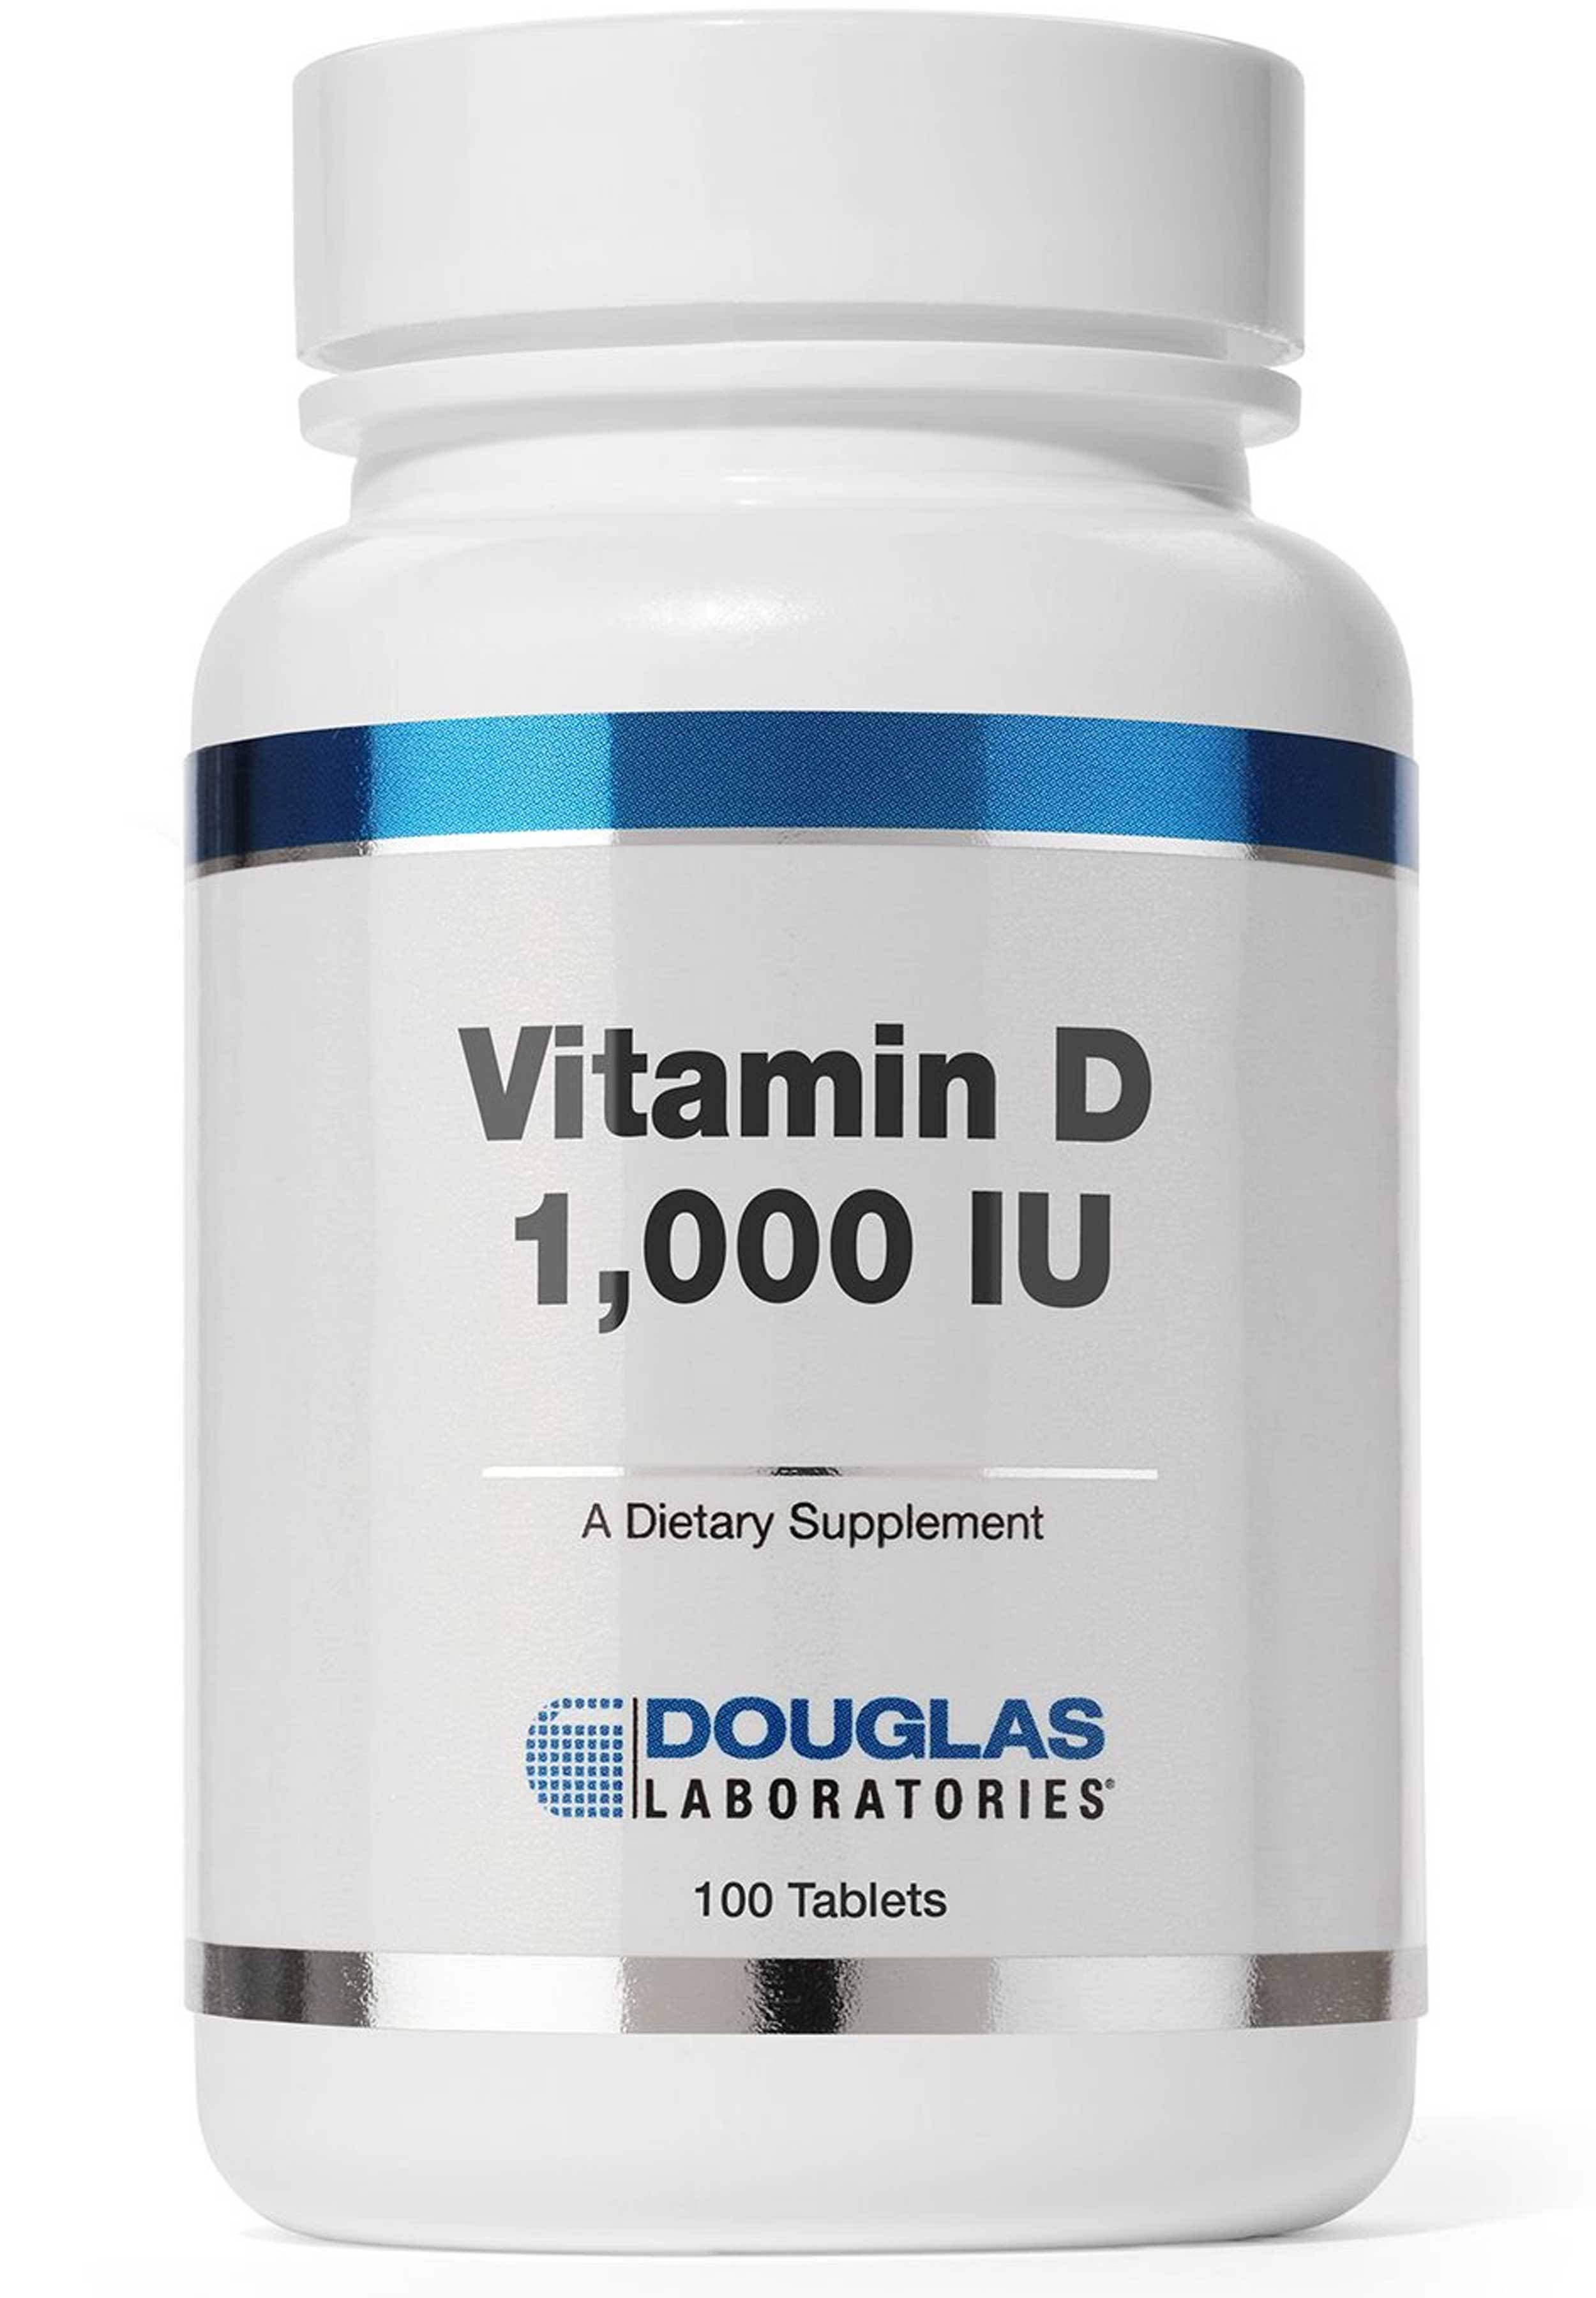 Douglas Laboratories Vitamin D 1000 IU Dietary Supplement - 100 Tablet